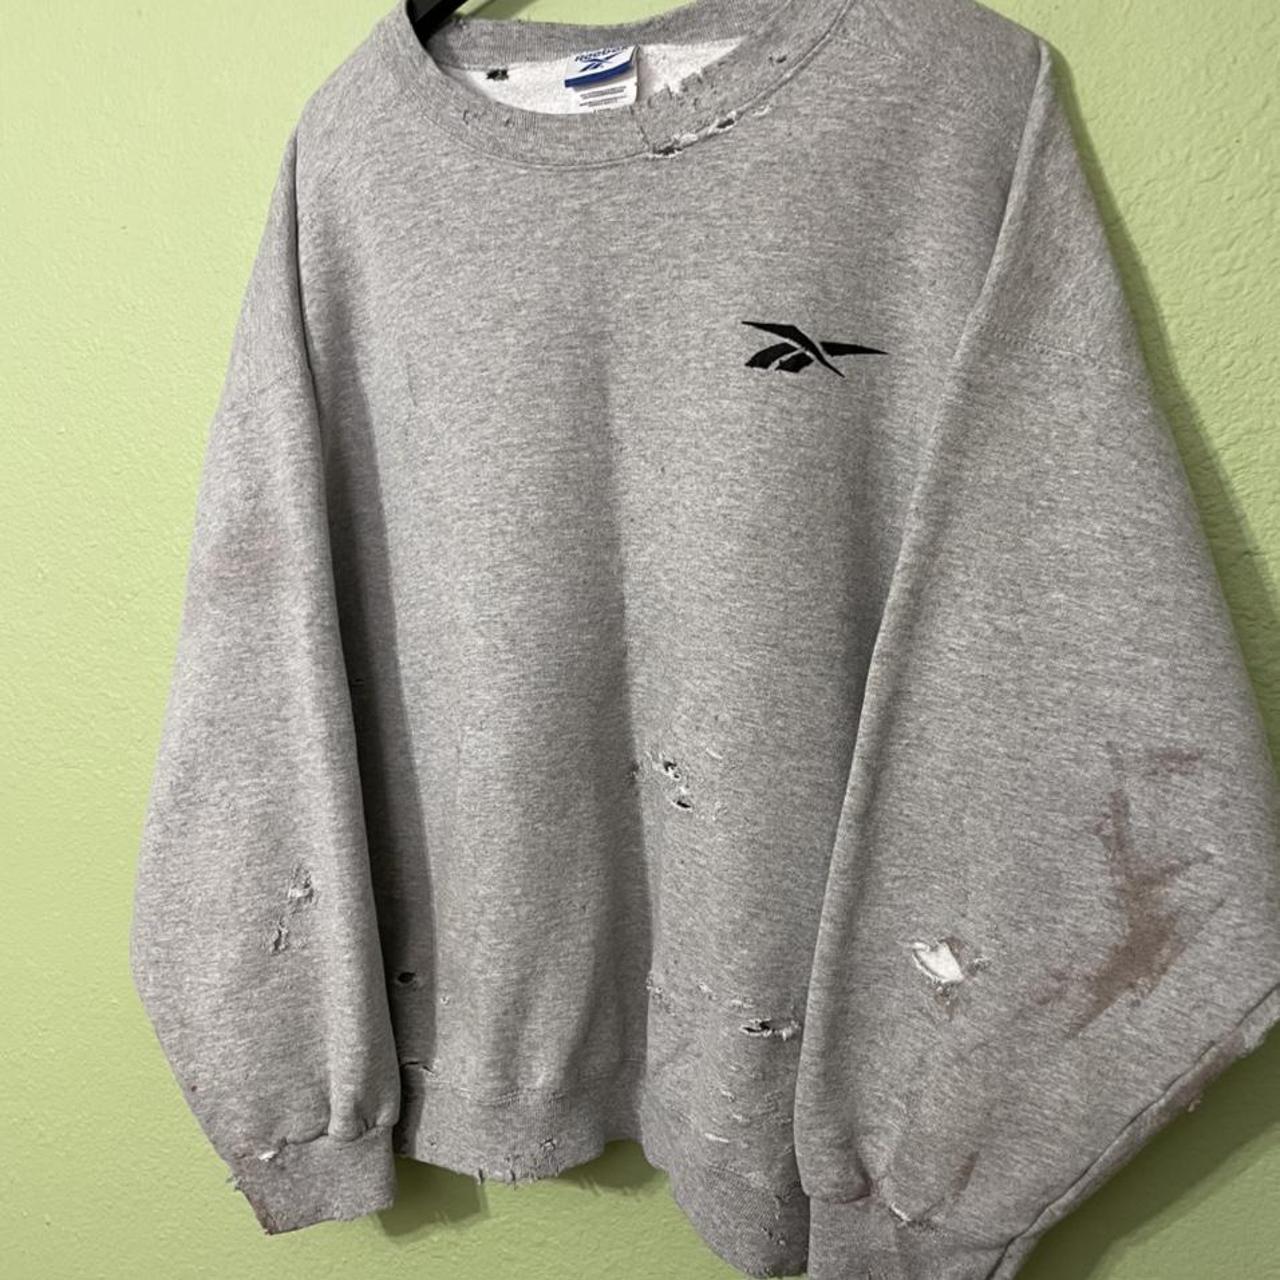 Product Image 2 - Vintage 90’s Reebok grunge sweatshirt